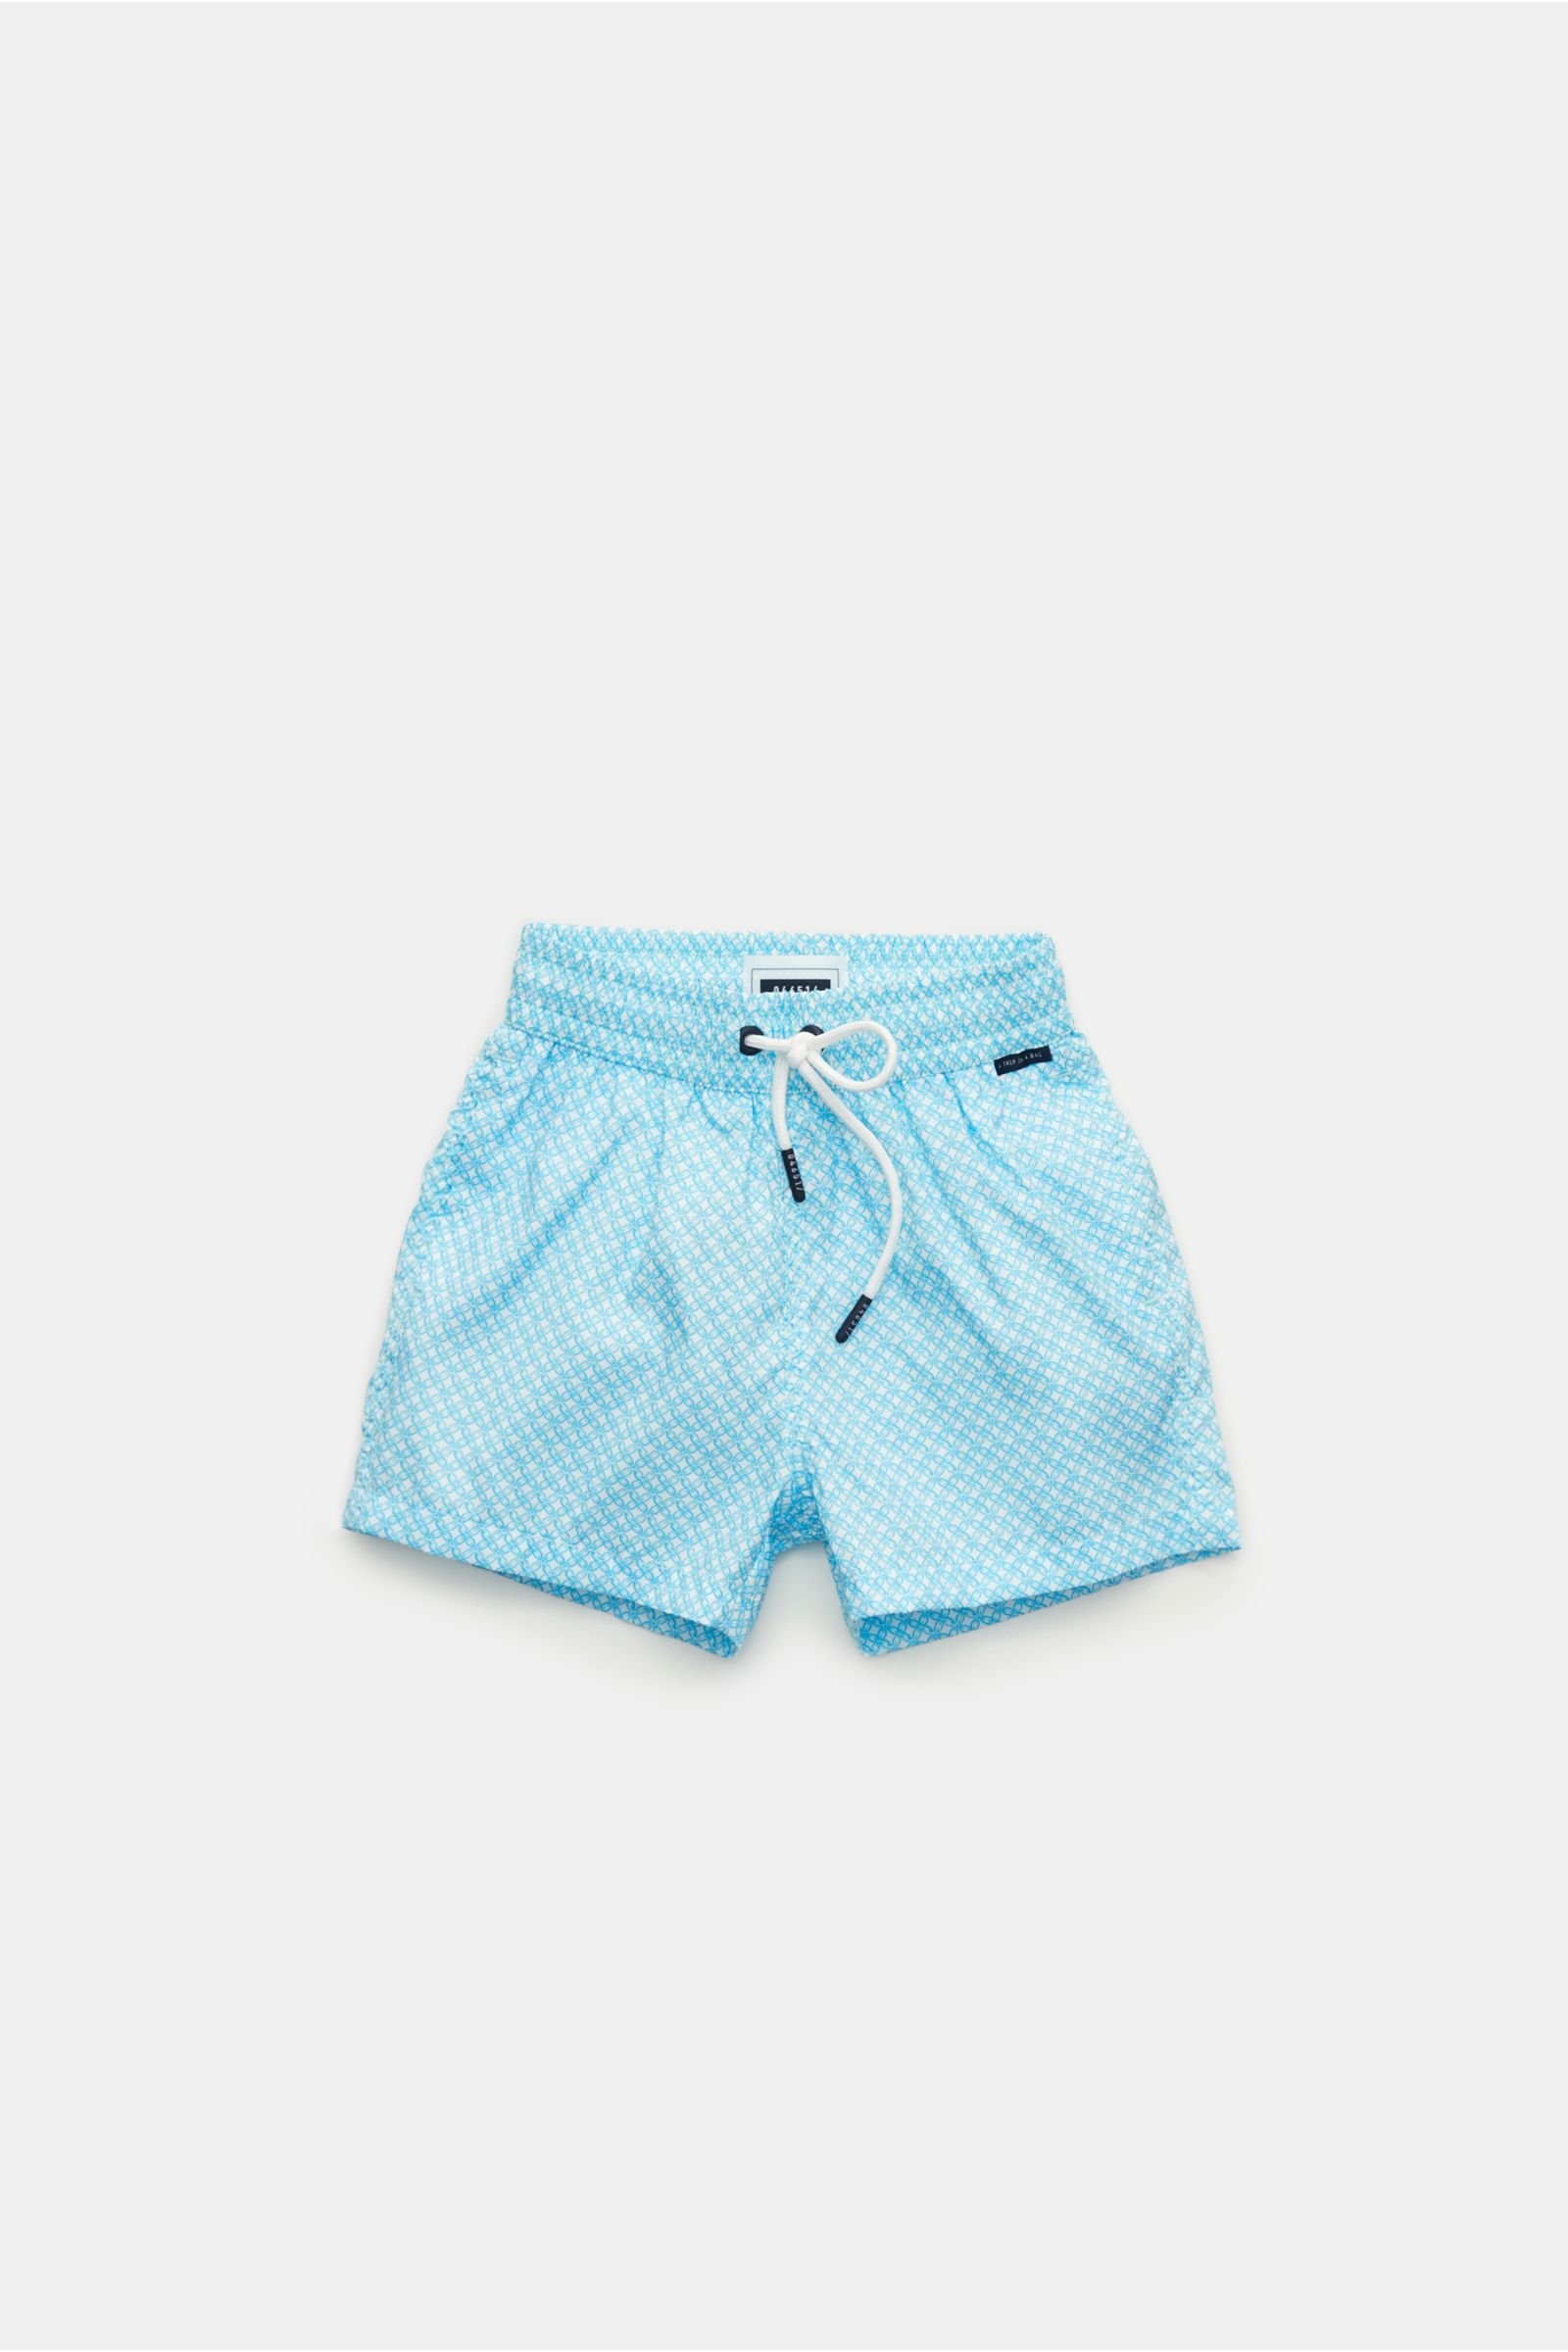 Kids swim shorts 'Kids Tile Swim' turquoise/white patterned